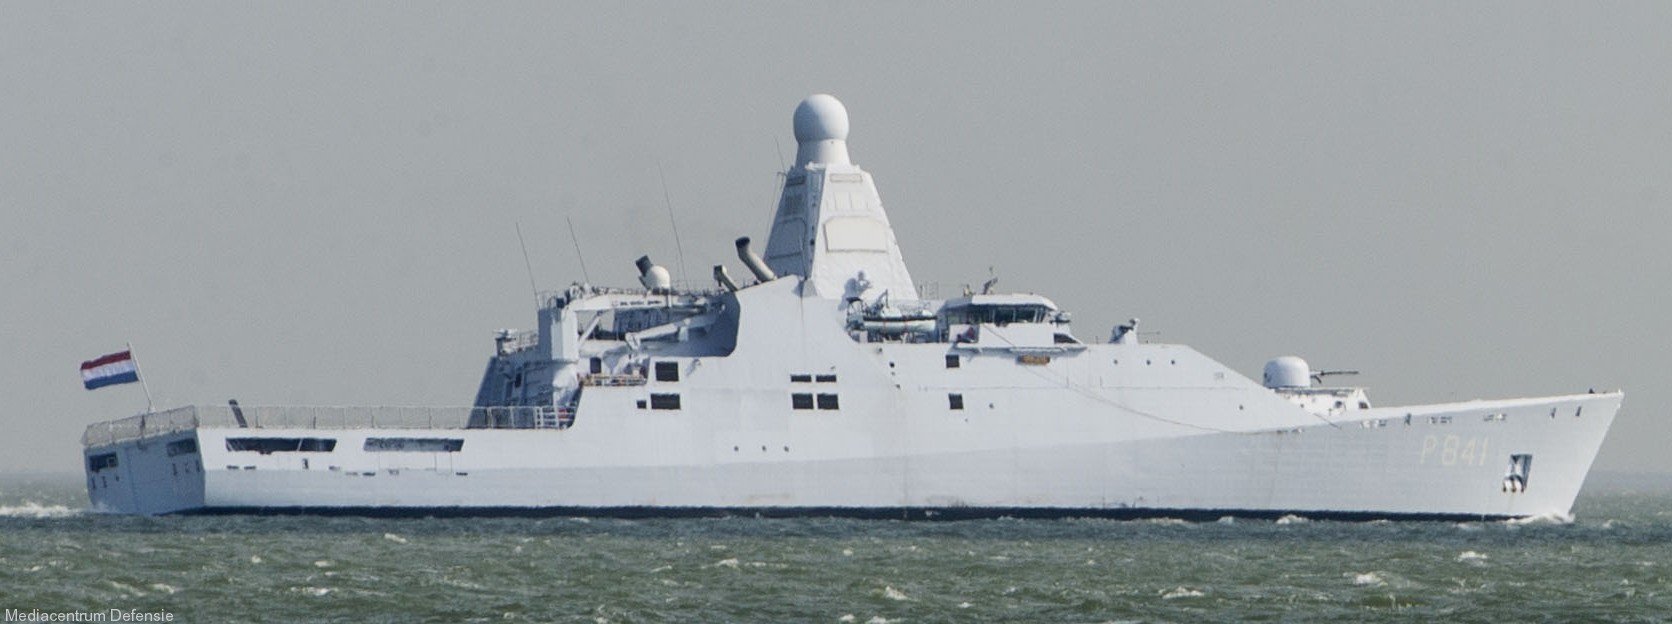 p-841 hnlms zeeland holland class offshore patrol vessel opv royal netherlands navy 05